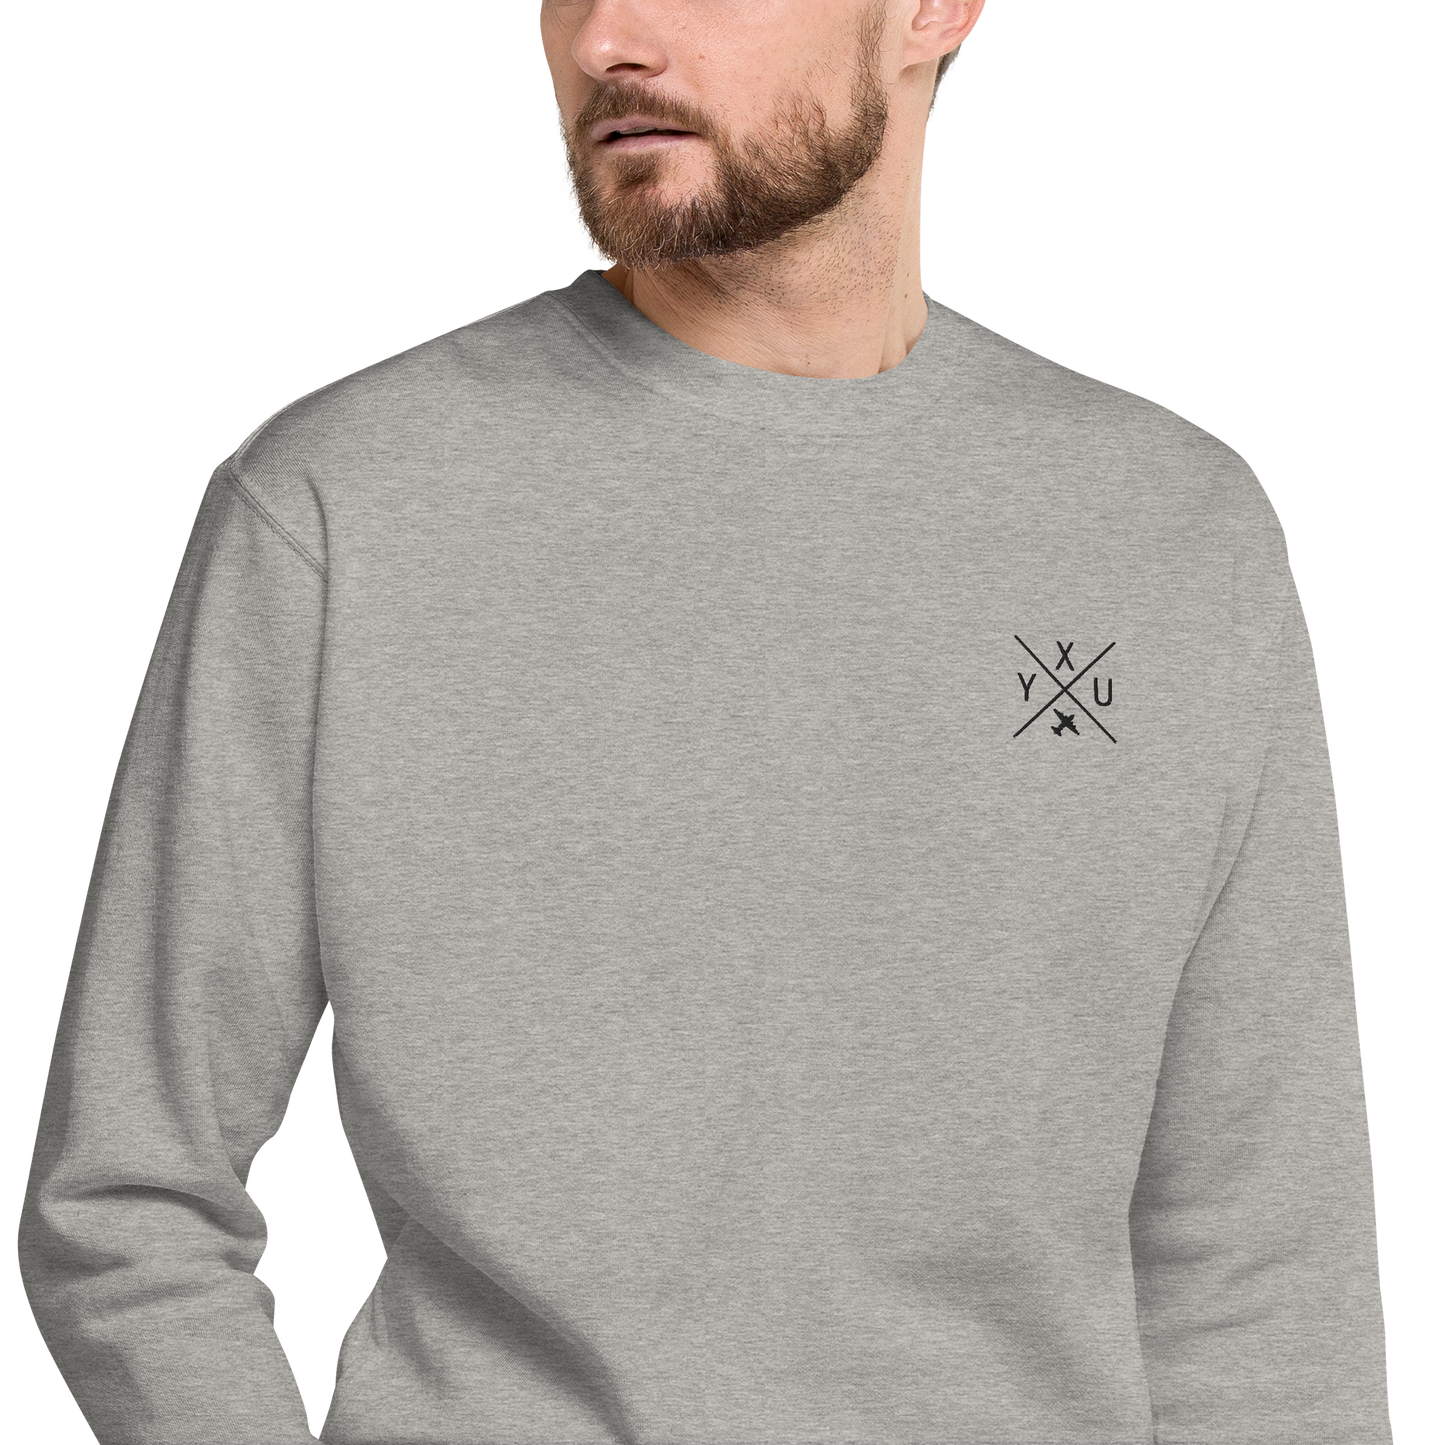 YHM Designs - YXU London Premium Sweatshirt - Crossed-X Design with Airport Code and Vintage Propliner - Black Embroidery - Image 09